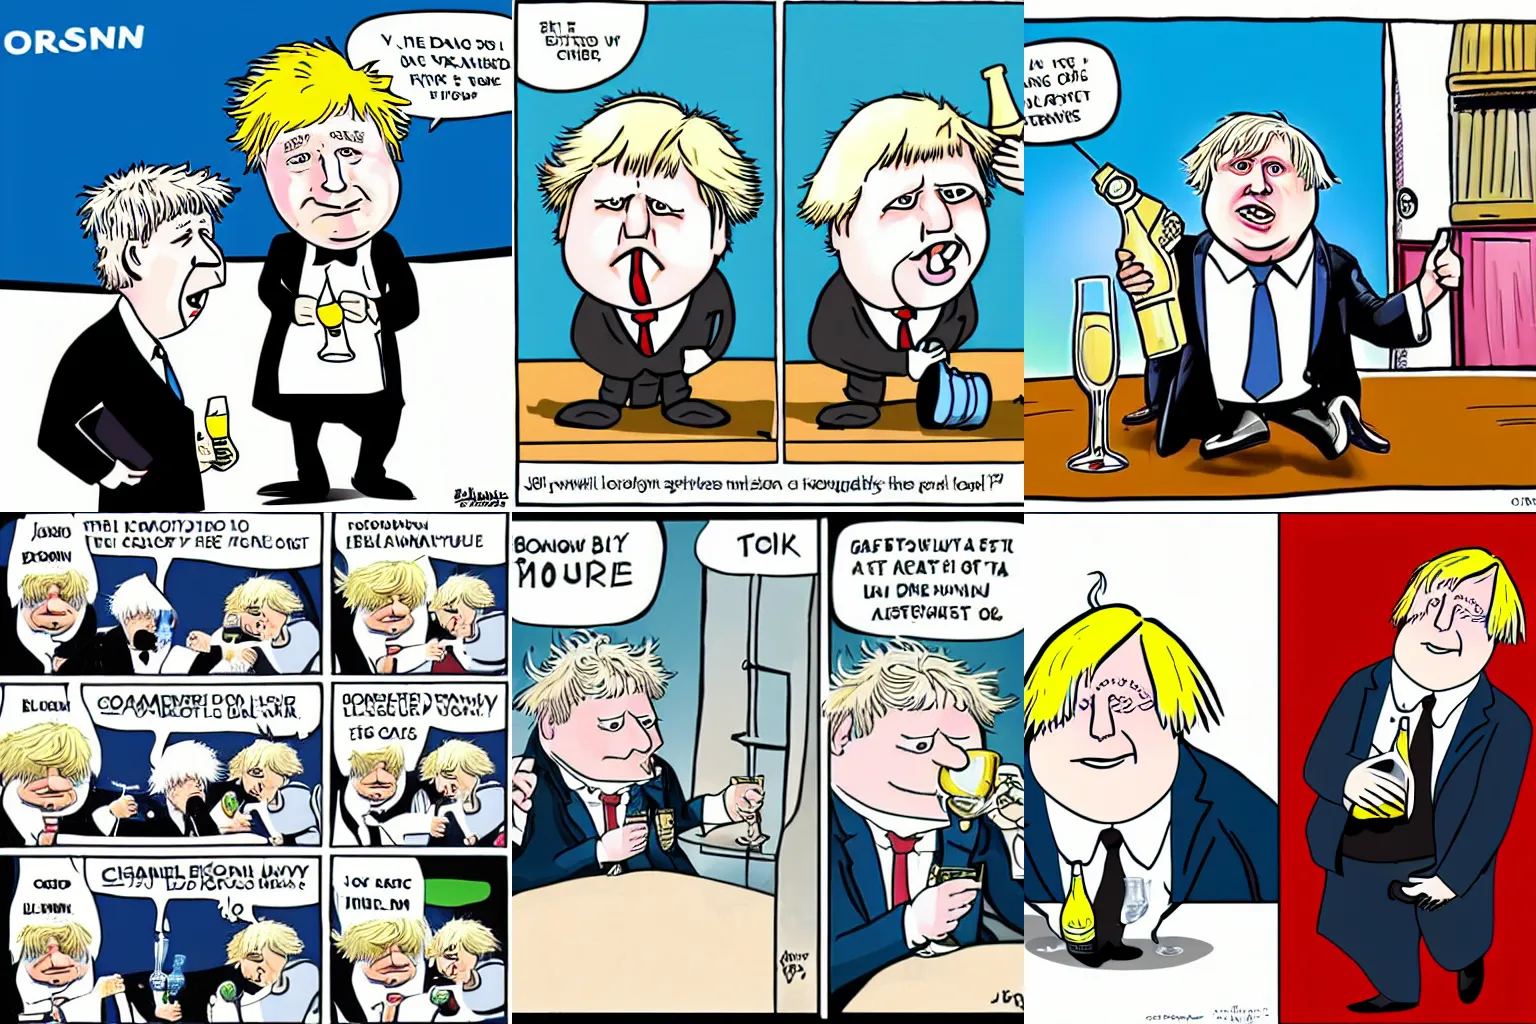 Prompt: Boris Johnson with champagne bottle, cartoon comic strip style